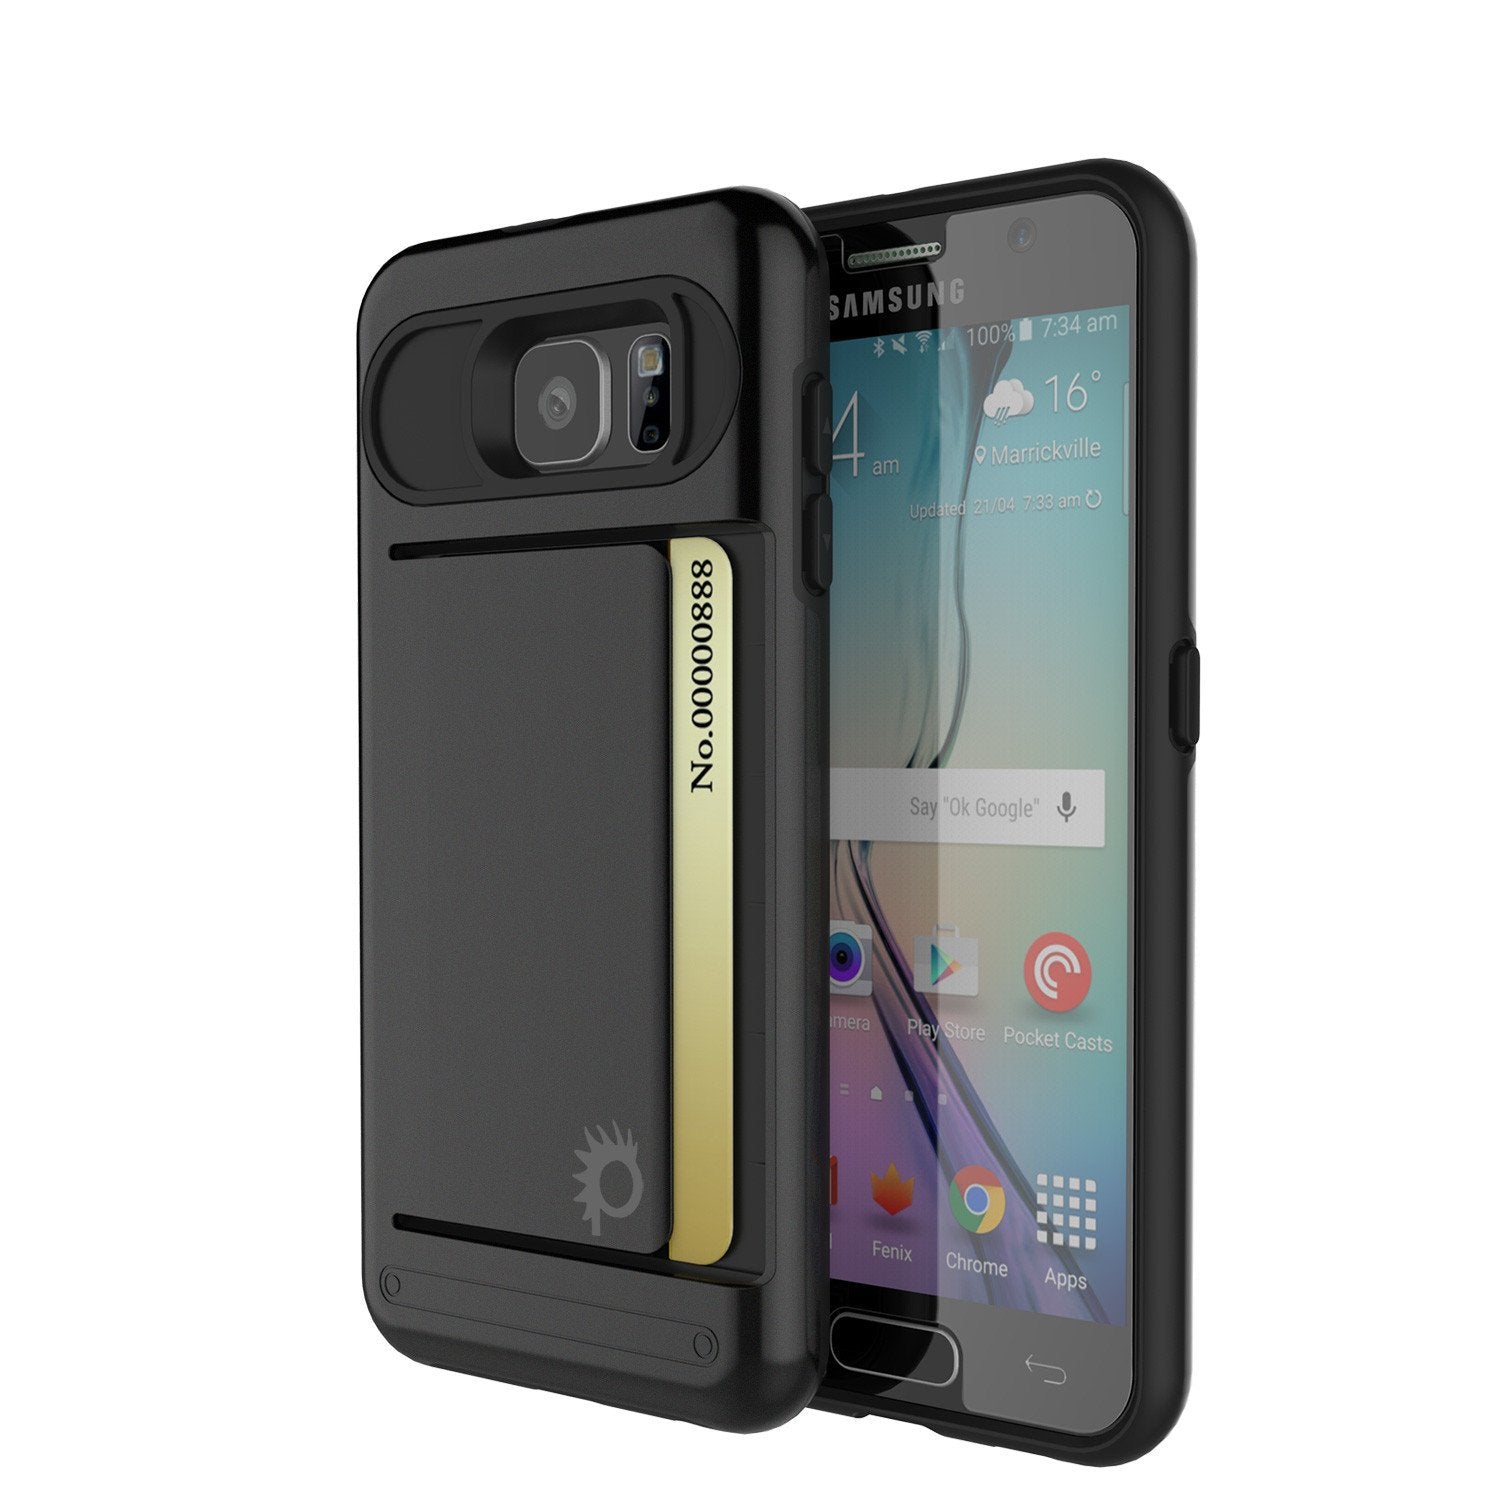 Galaxy S6 EDGE Case PunkCase CLUTCH Black Series Slim Armor Soft Cover Case w/ Screen Protector